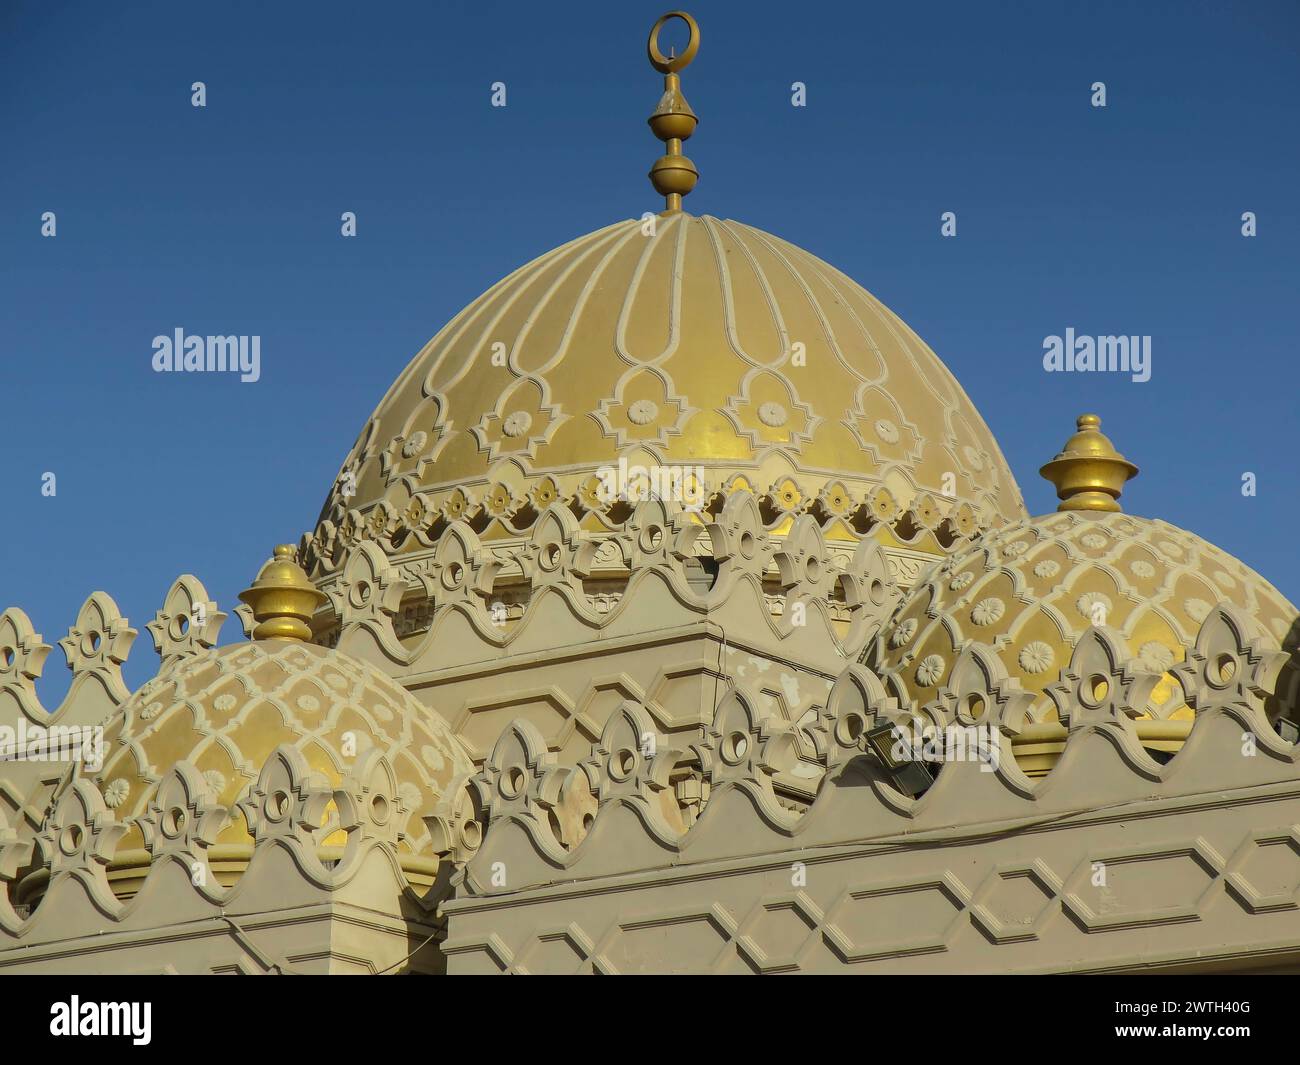 Al Mina Moschee, Hurghada, Ägypten *** Al Mina Mosque, Hurghada, Egypt Stock Photo